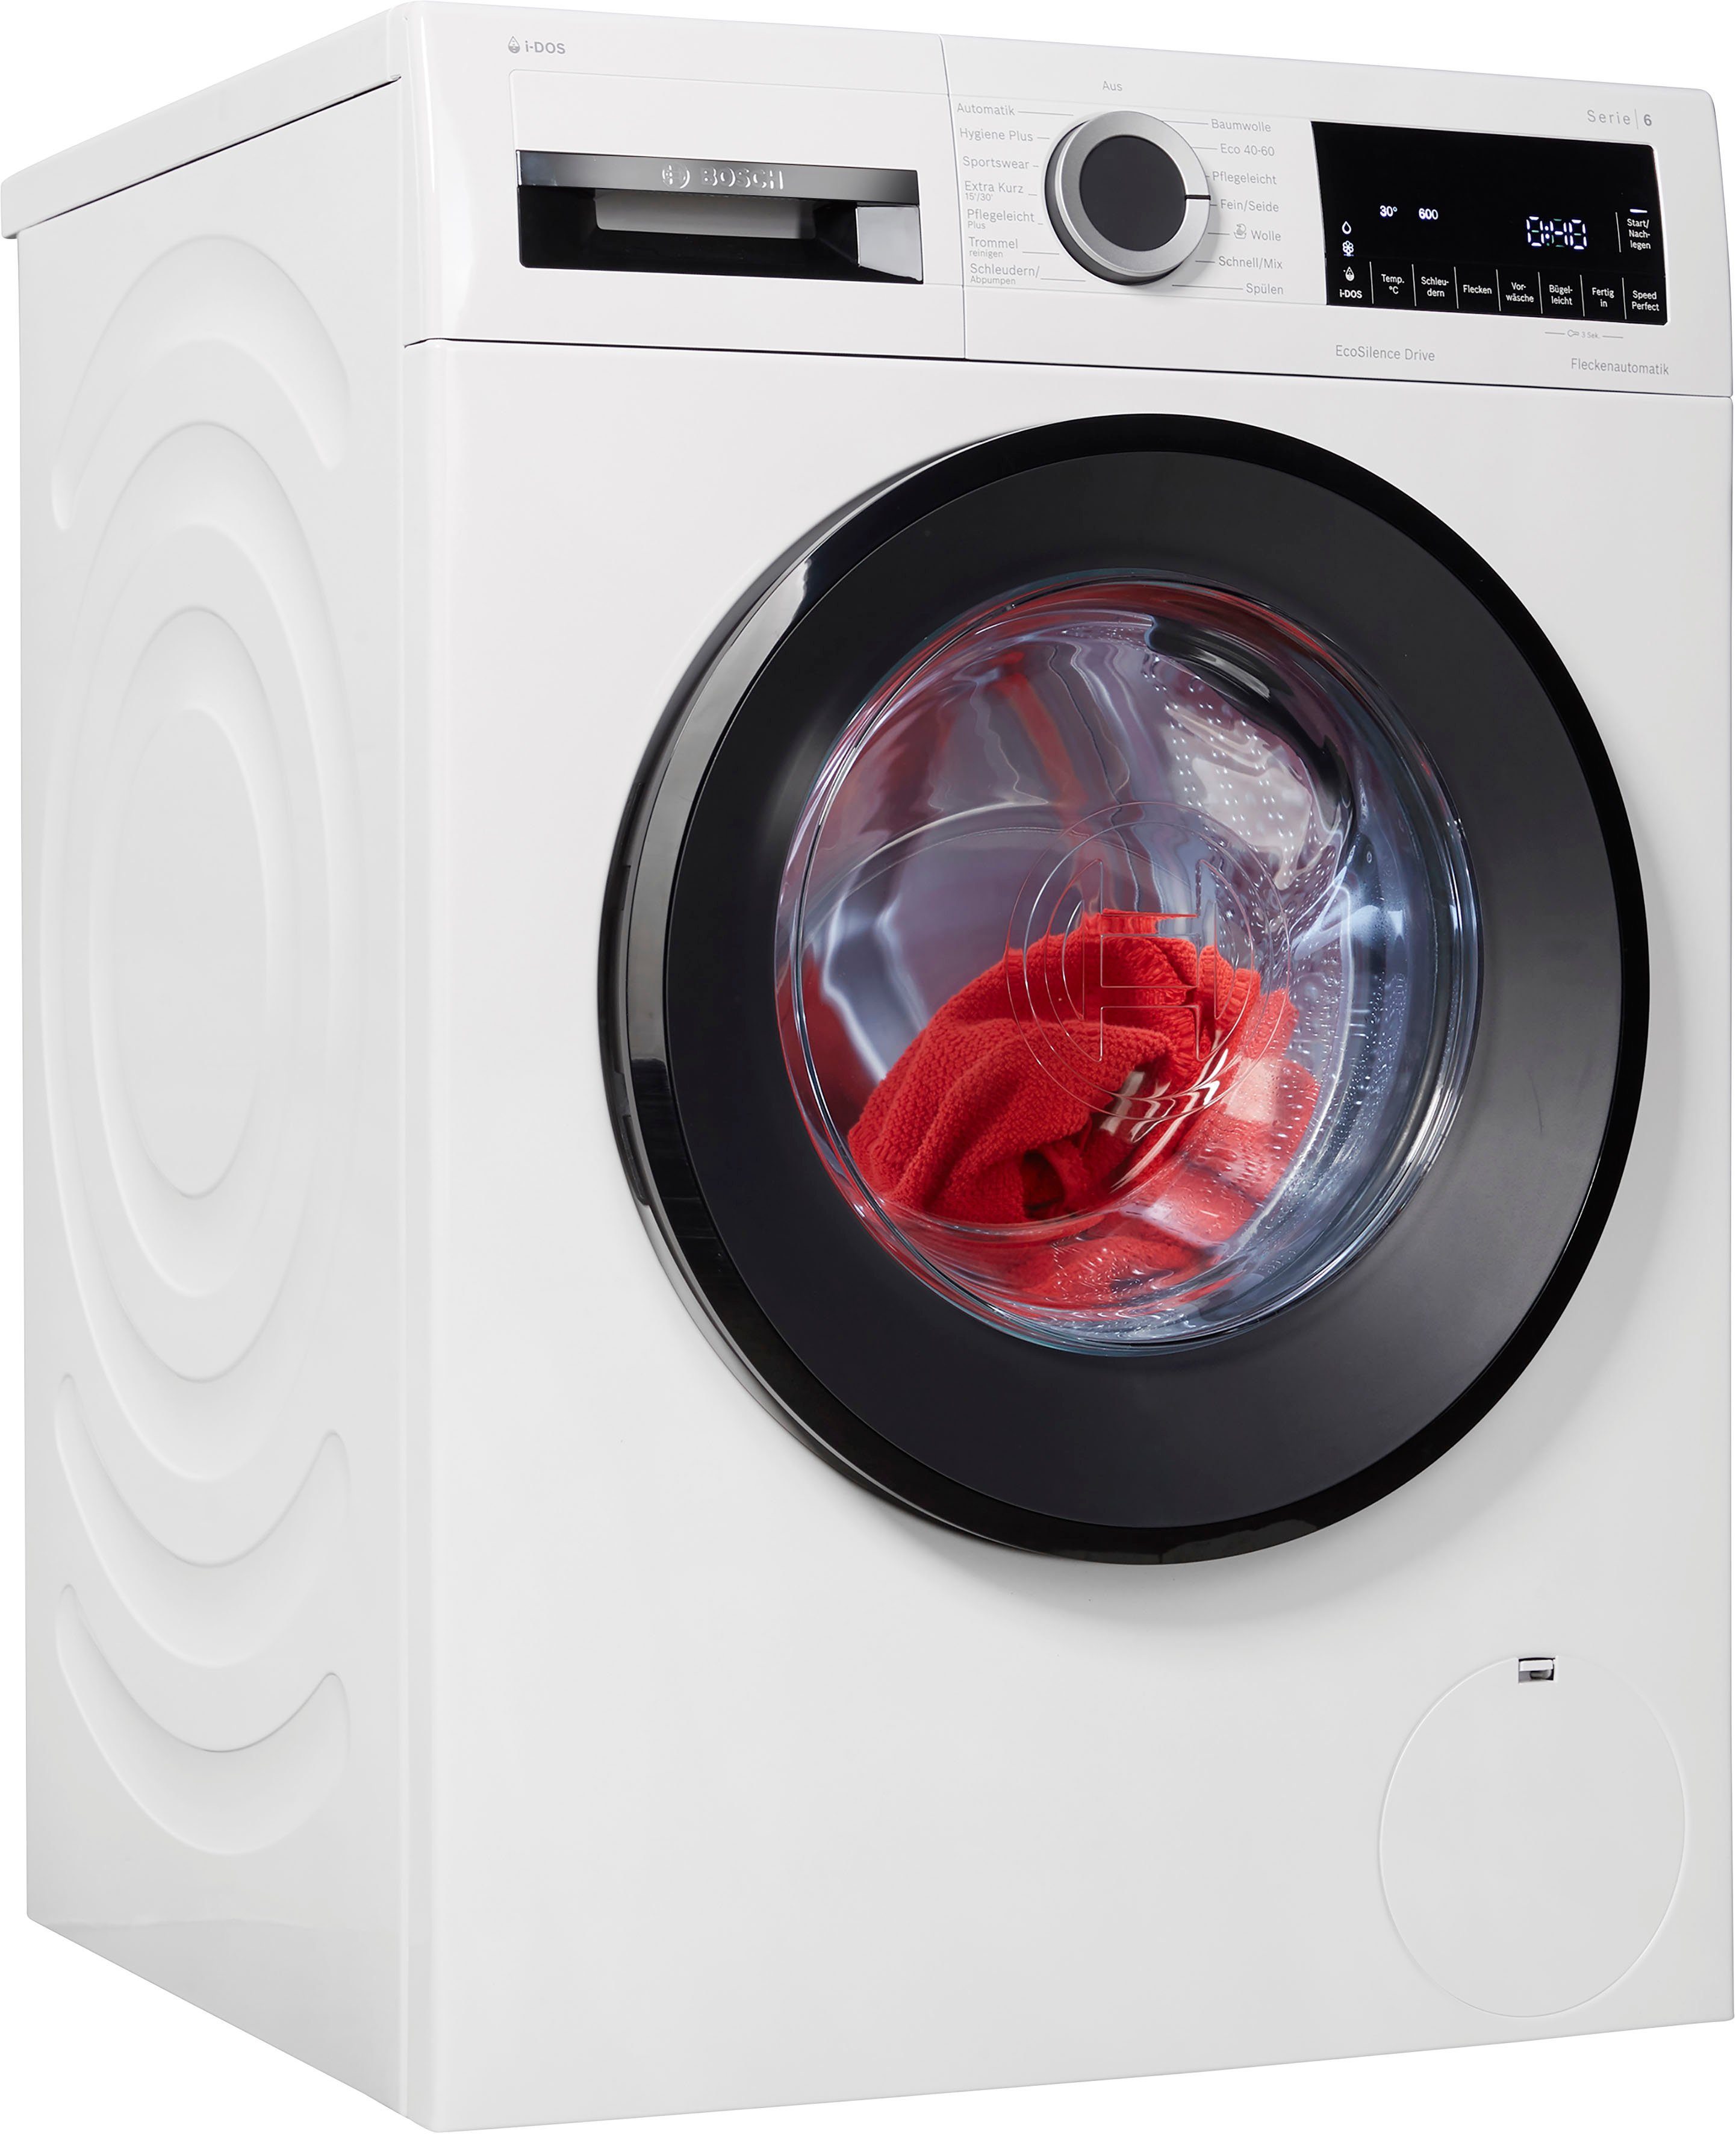 BOSCH Waschmaschine WGG154A20, 10 kg, 1400 U/min | Frontlader